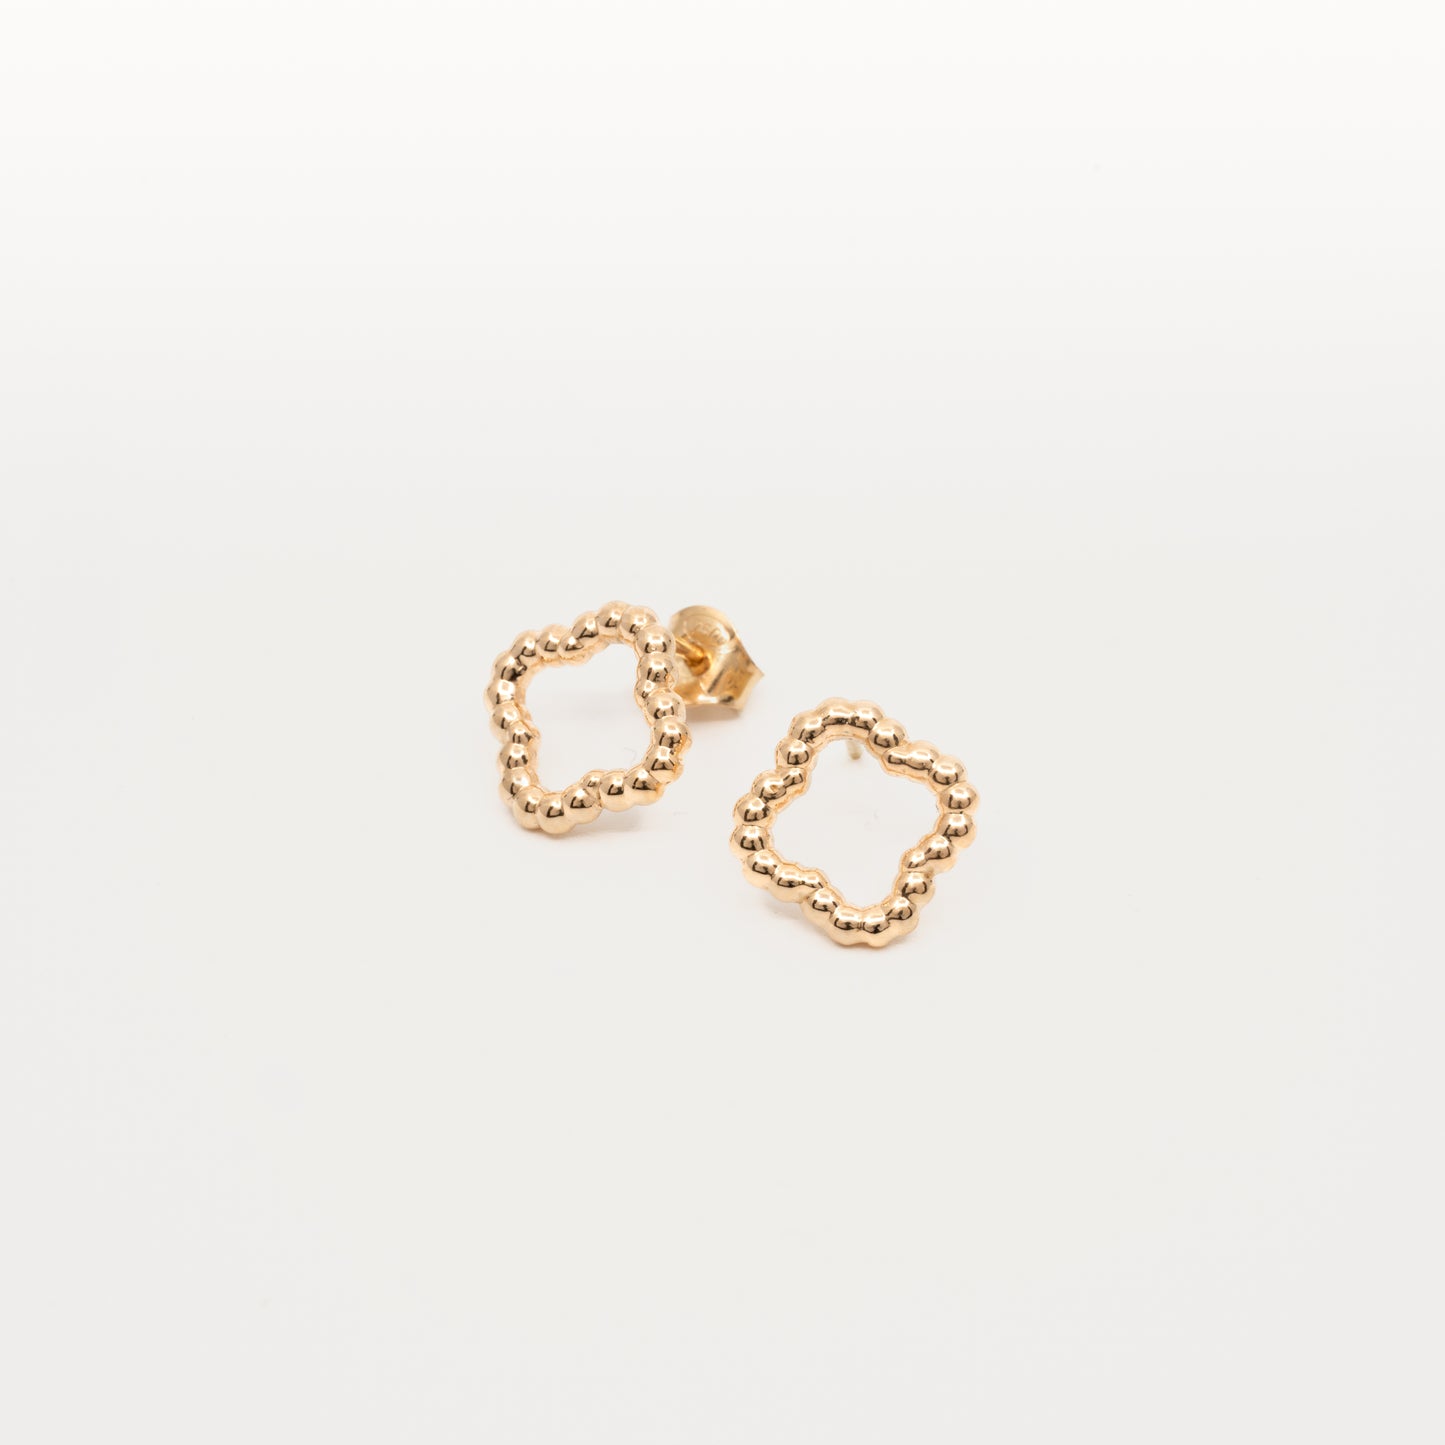 Creo Marbles Petit - Gold earrings